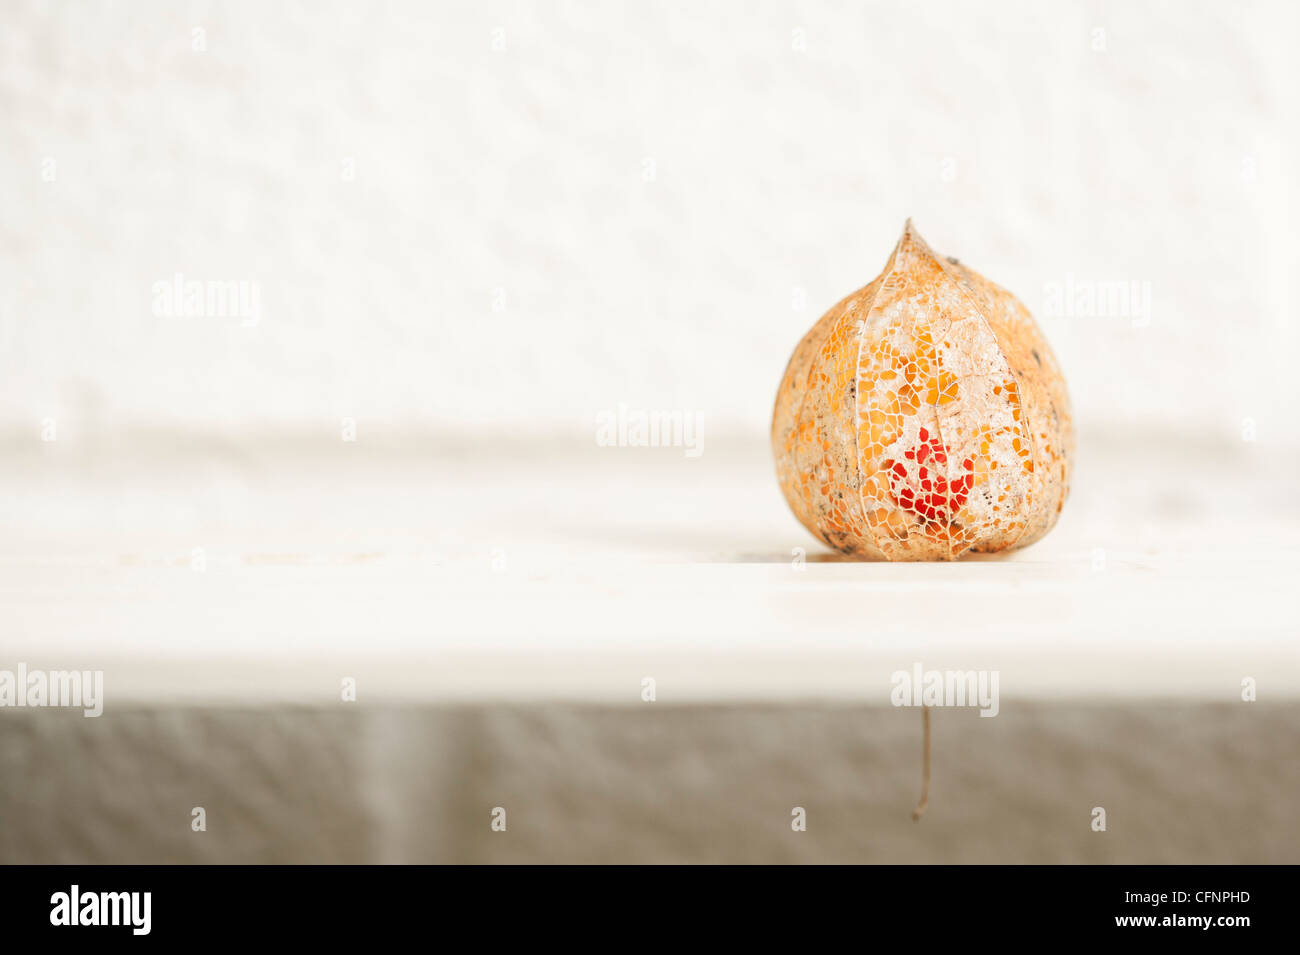 Physalis alkekengi Franchetii "". Lanterna cinese frutto in decadimento lolla cartaceo contro uno sfondo chiaro Foto Stock